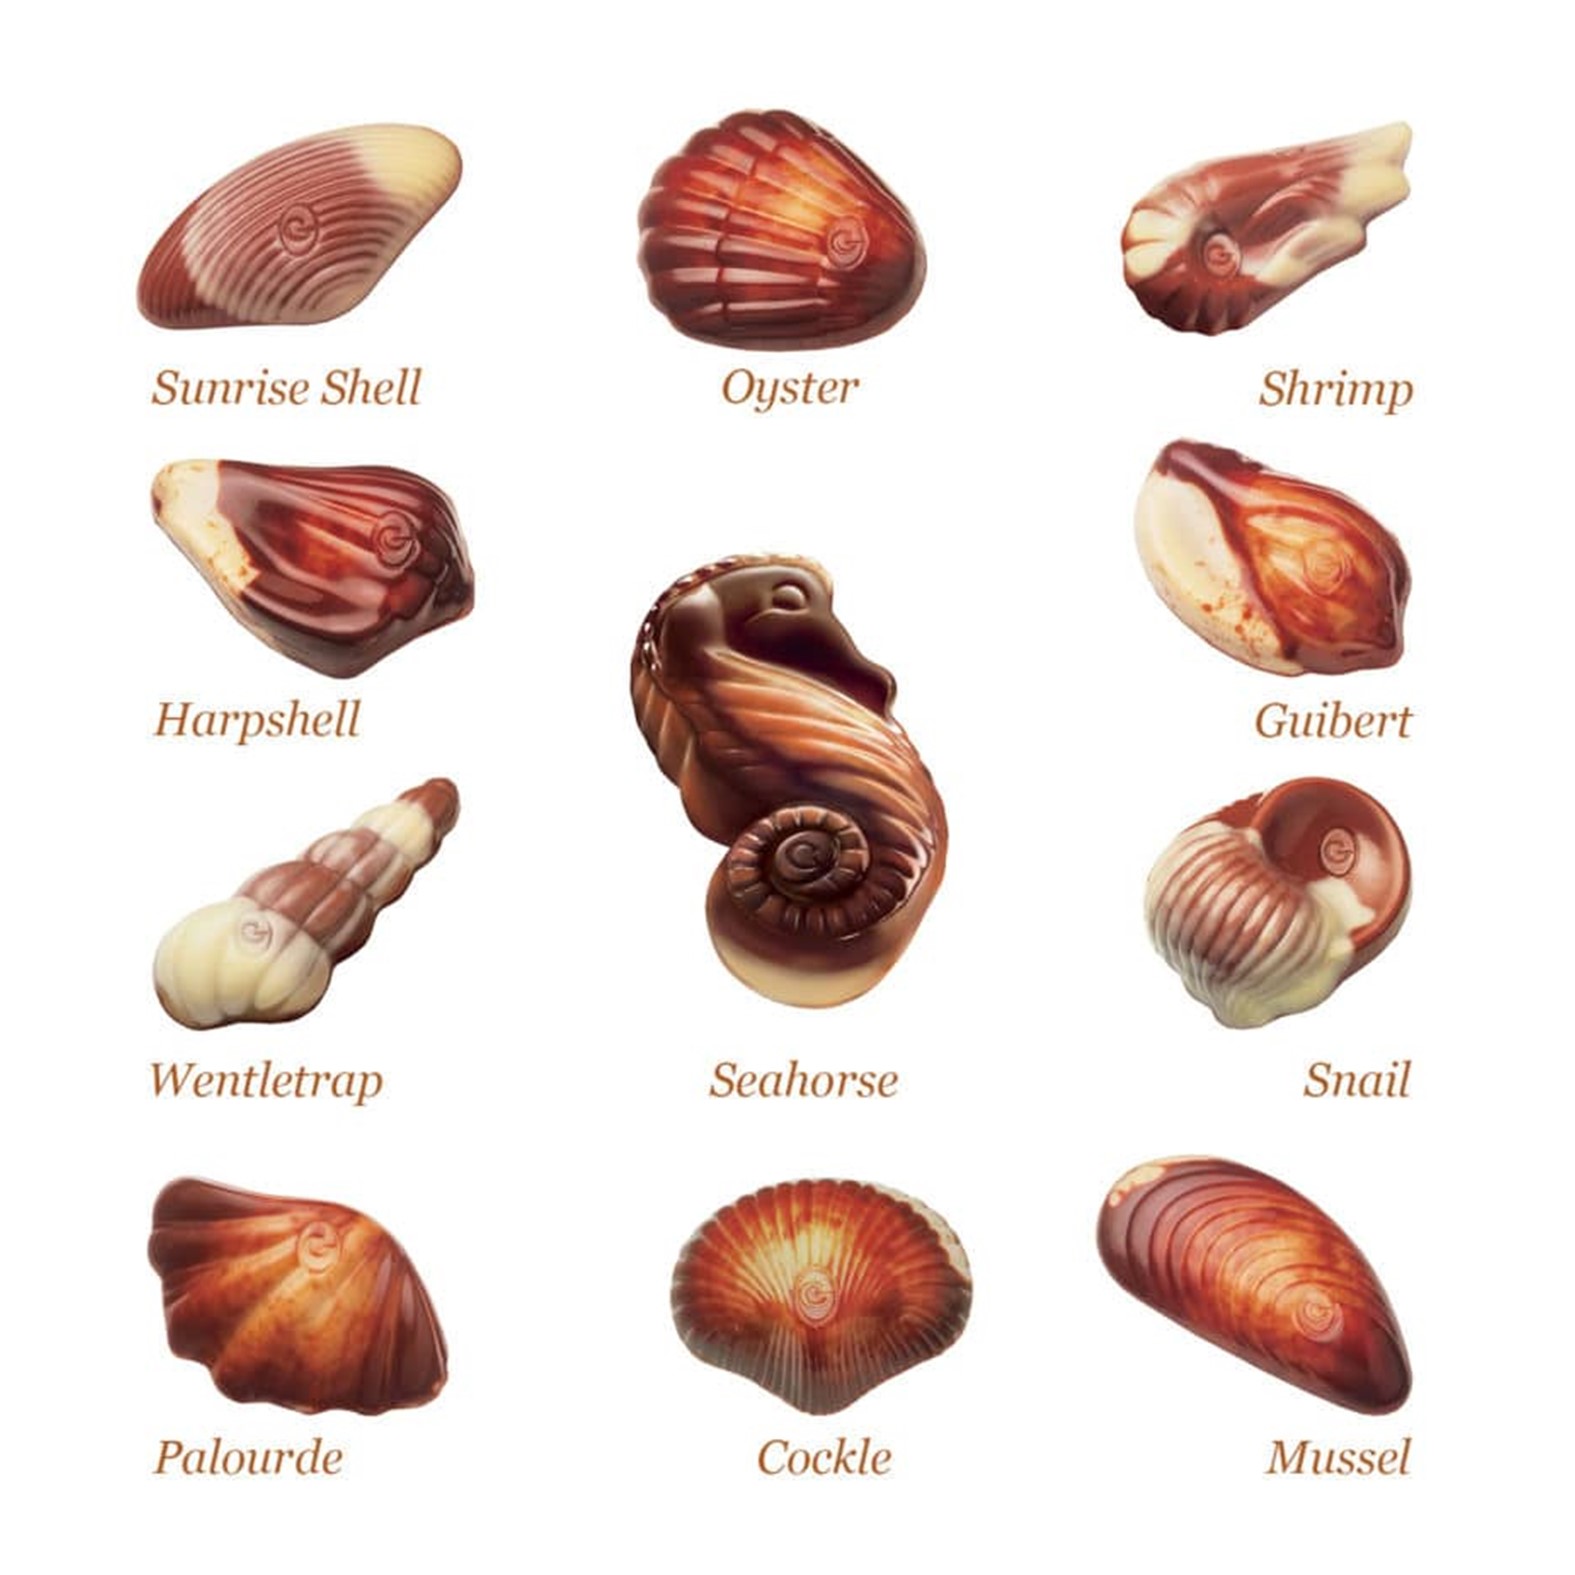 Guylian Bombones de Chocolate - The Original Sea Shell- Image 3